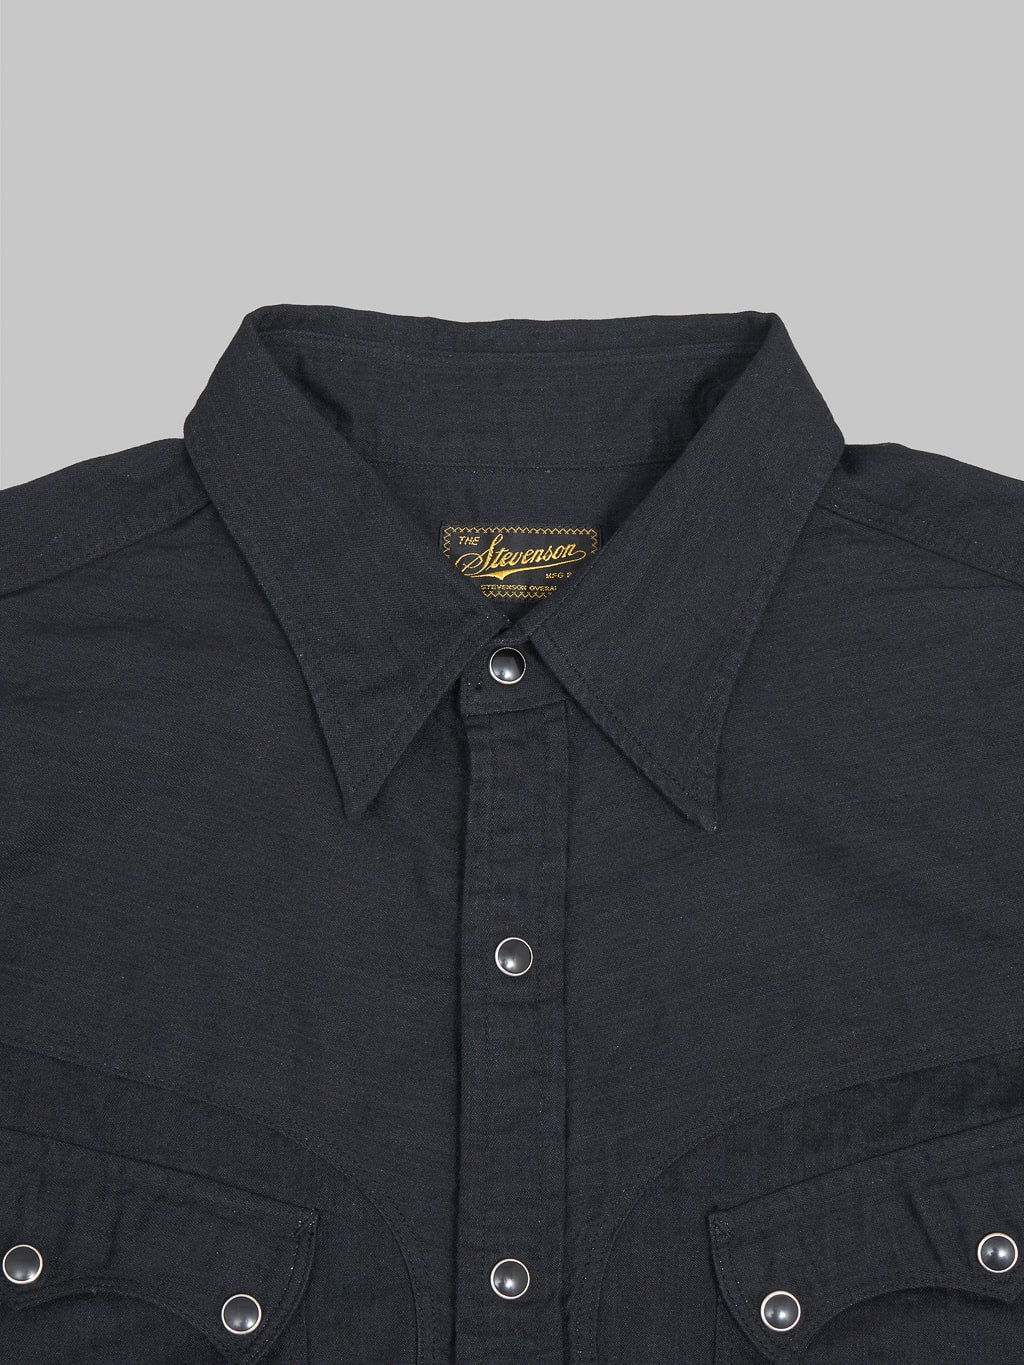 Stevenson Overall Cody Shirt black denim  collar closeup